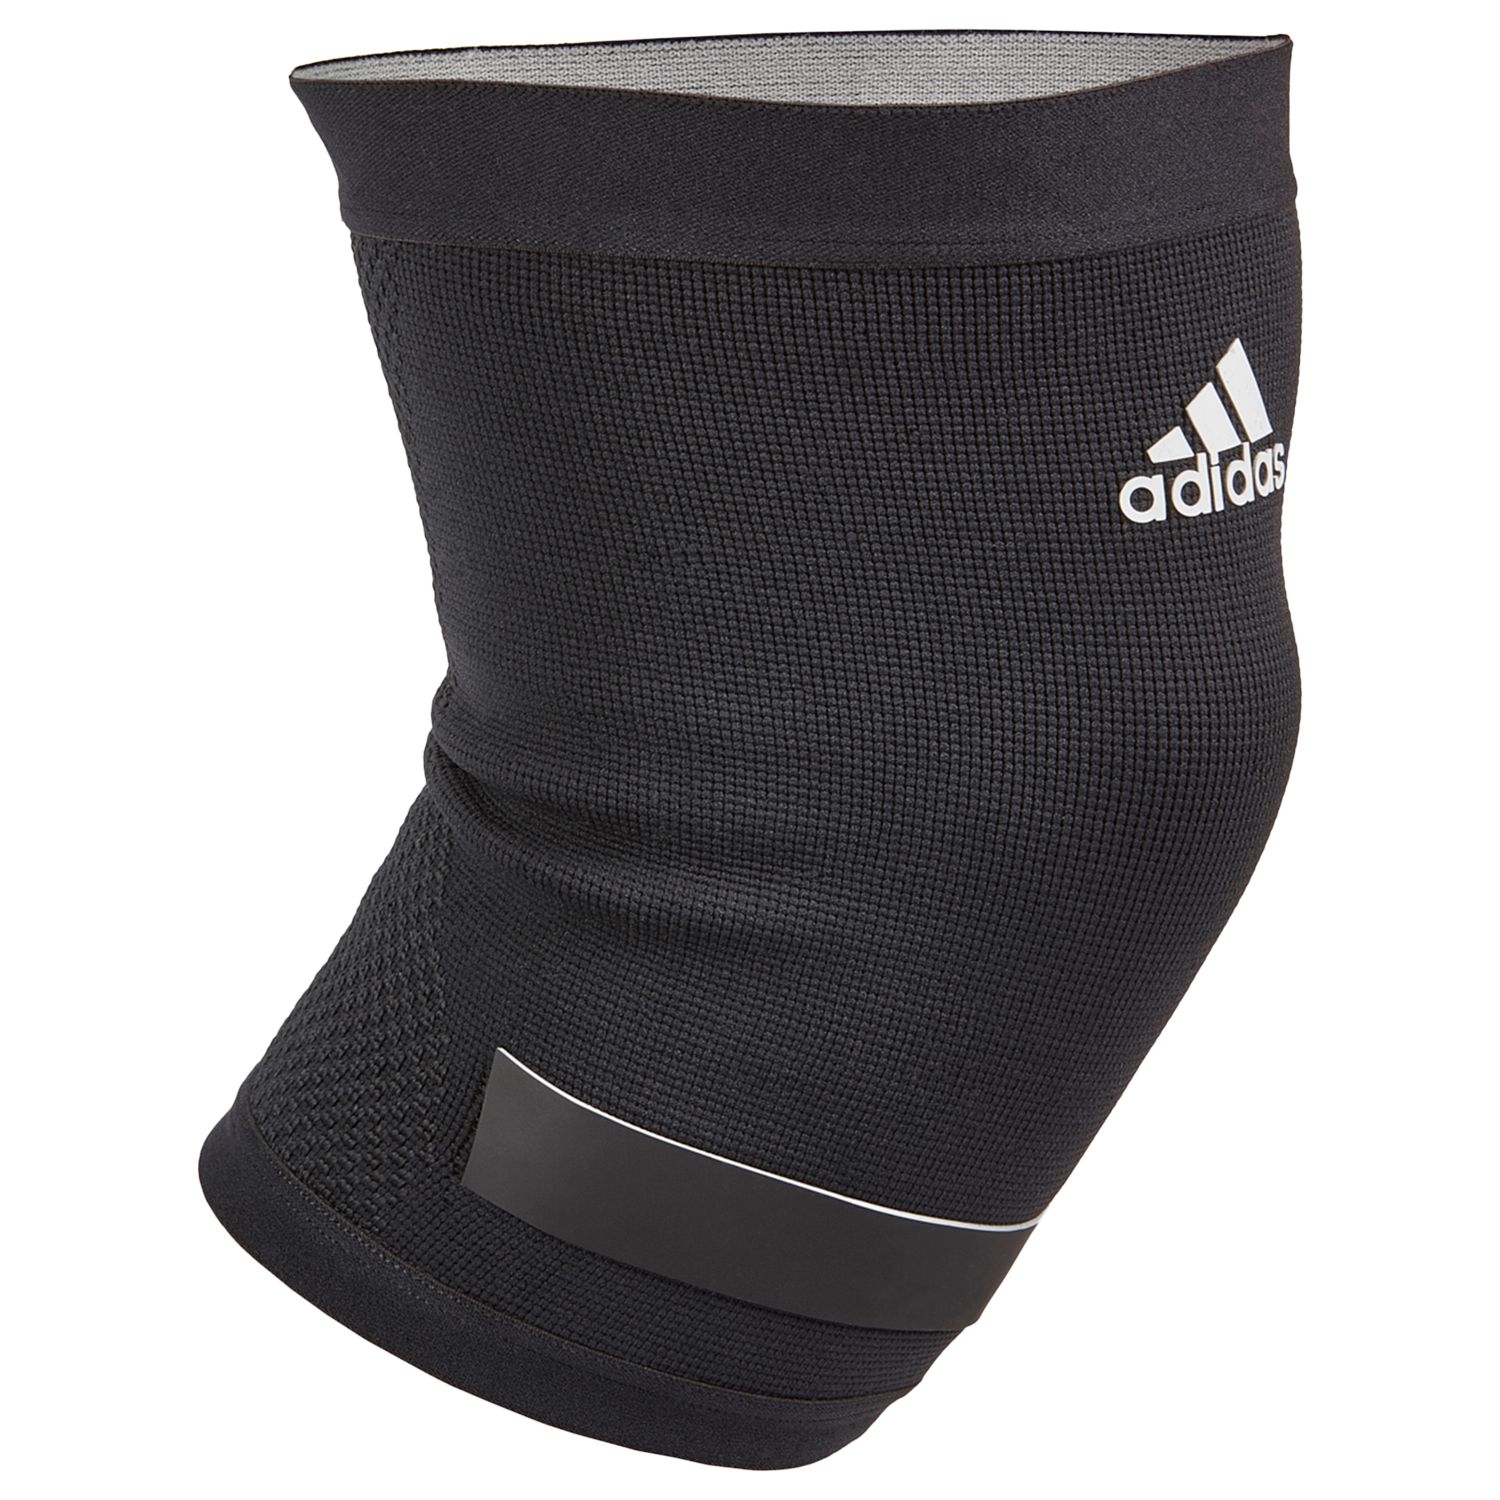 adidas knee brace